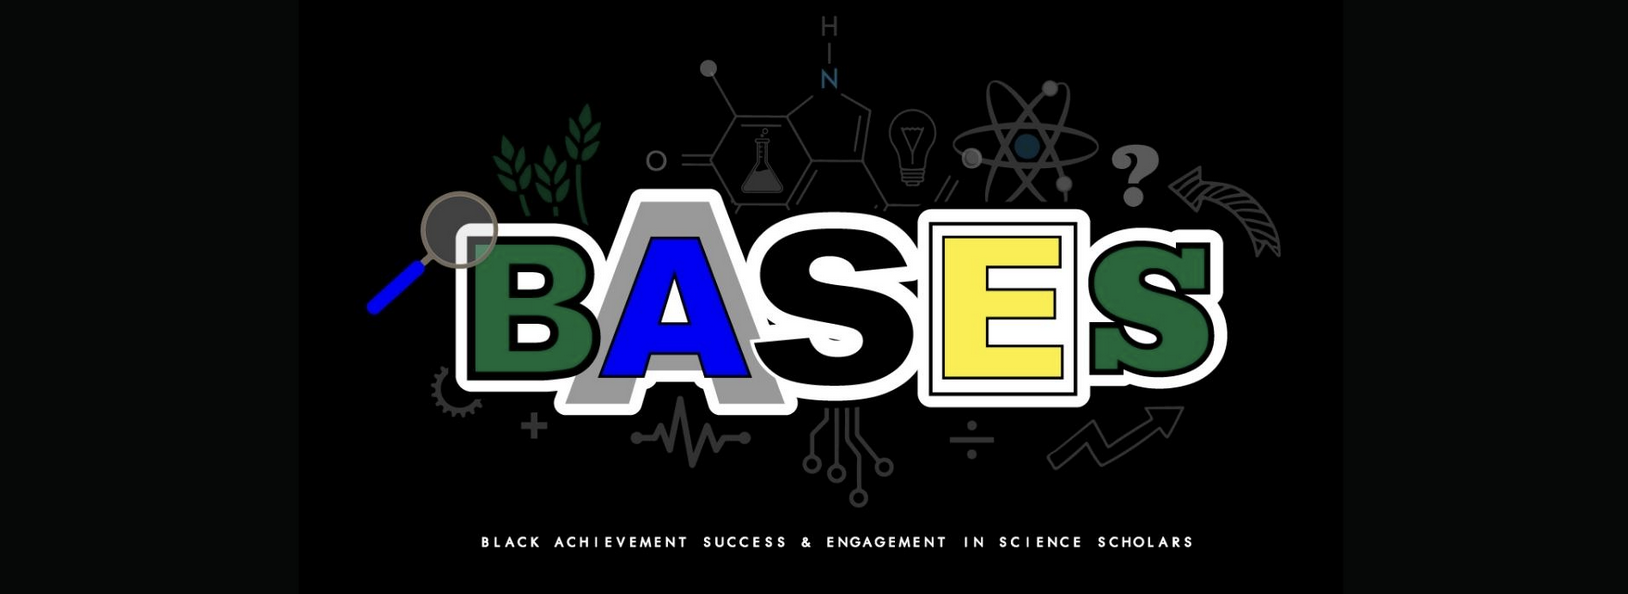 BASES Logo